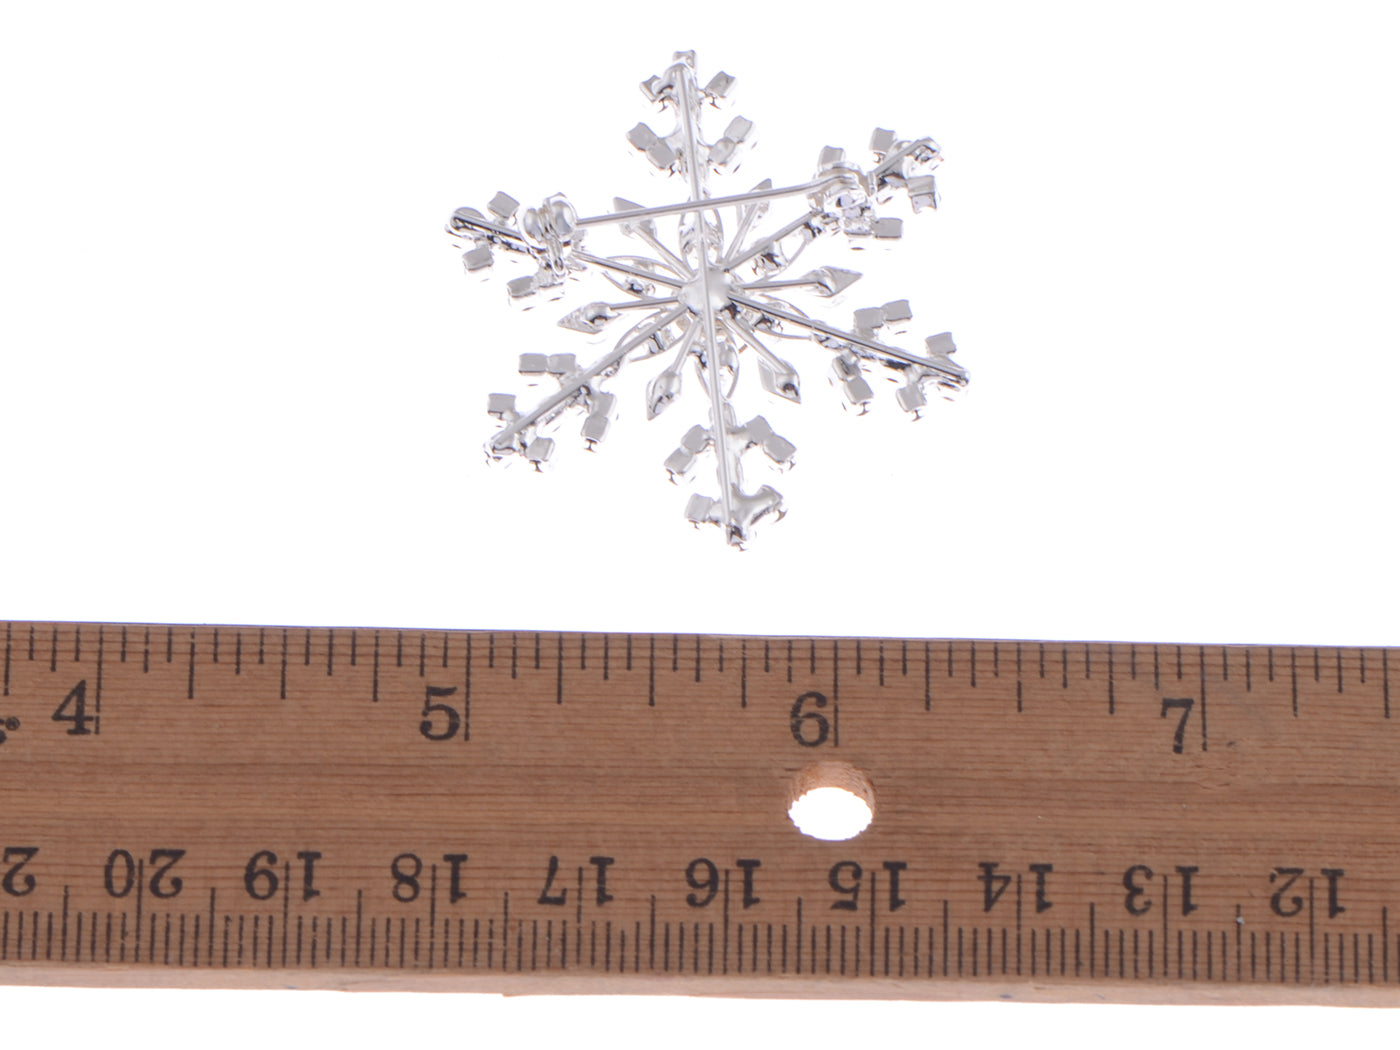 Winter Festive Snowflake Brooch Pin